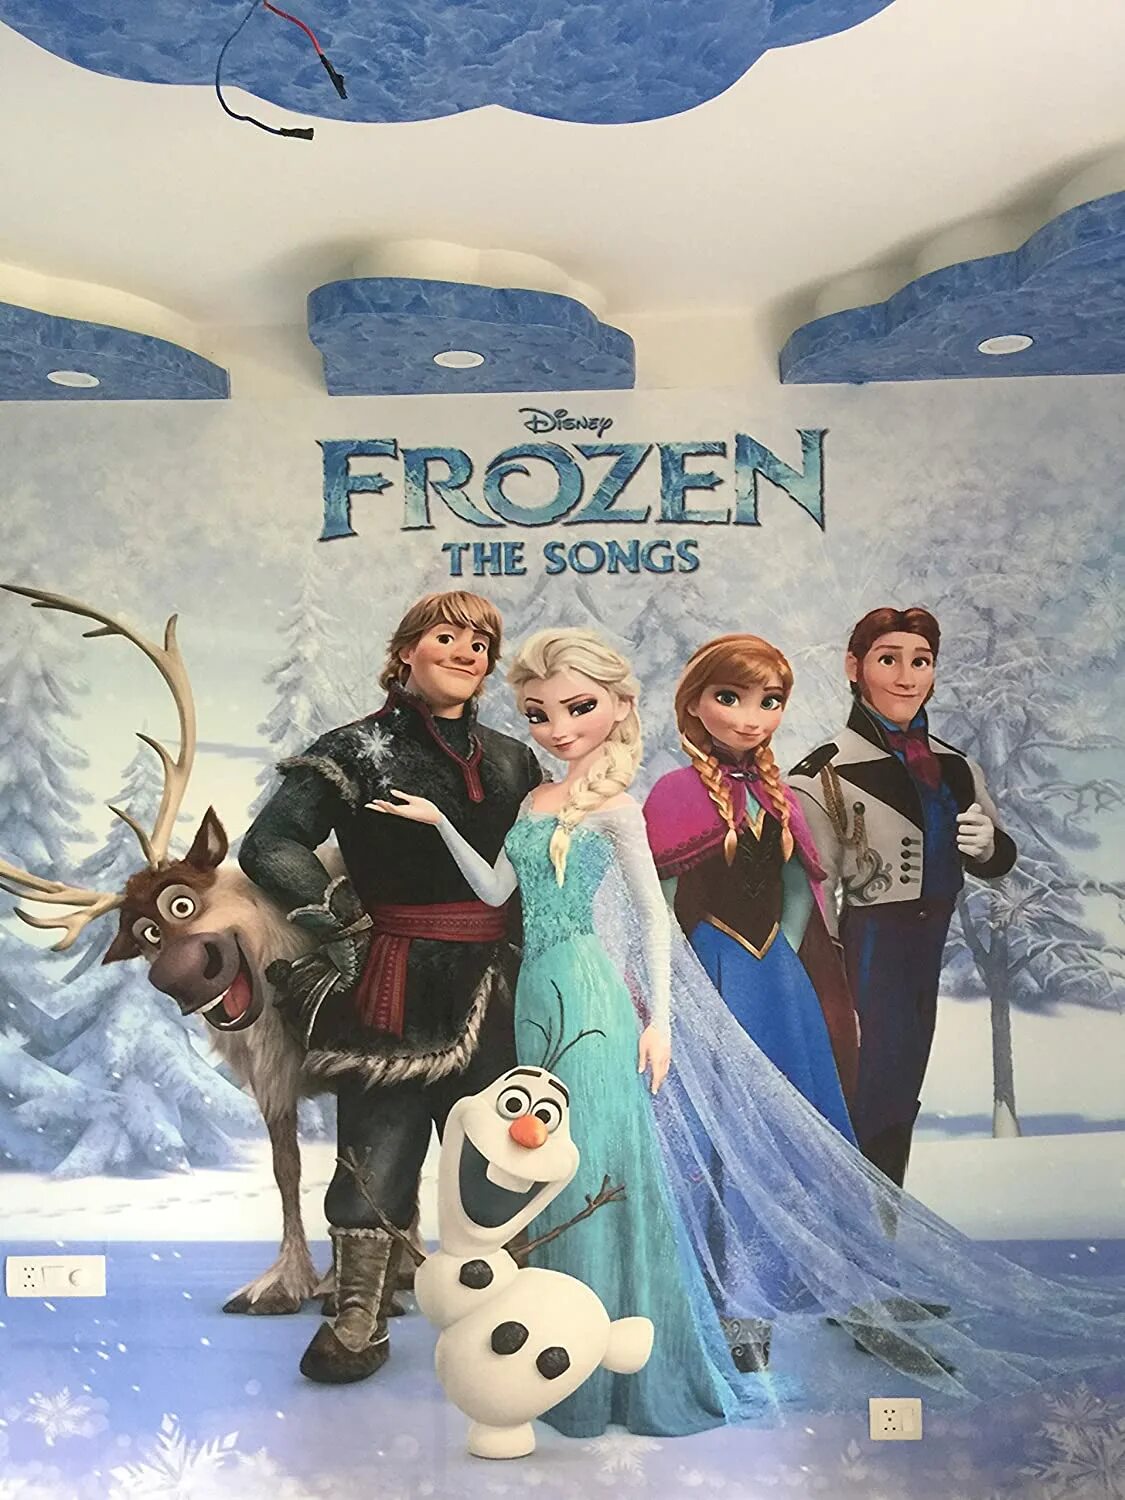 Spirit of the frozen. Frozen Soundtrack. Frozen 3 Soundtrack. Frozen Soundtrack album Vinyl. Disney Frozen Soundtrack Vinyl.